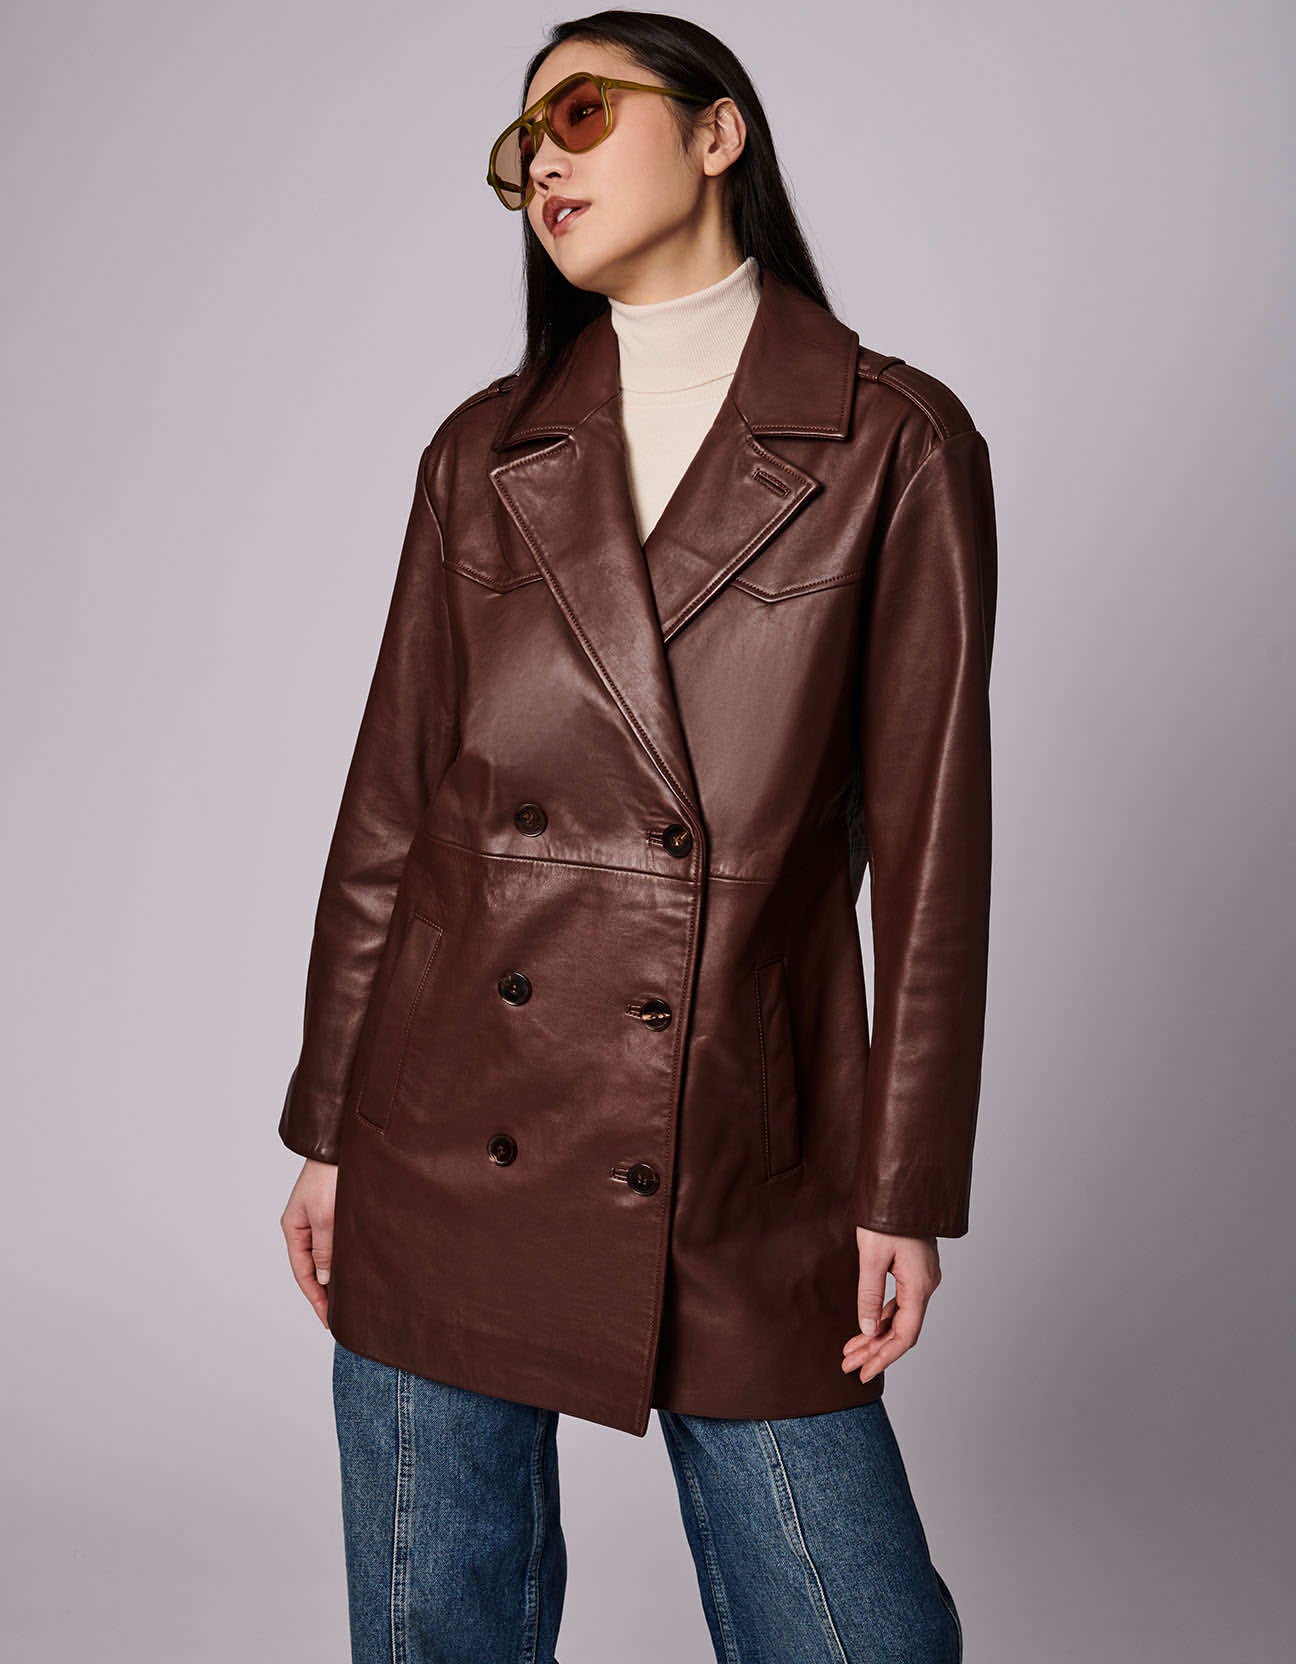 Stylish Leather Jackets for Your Wardrobe